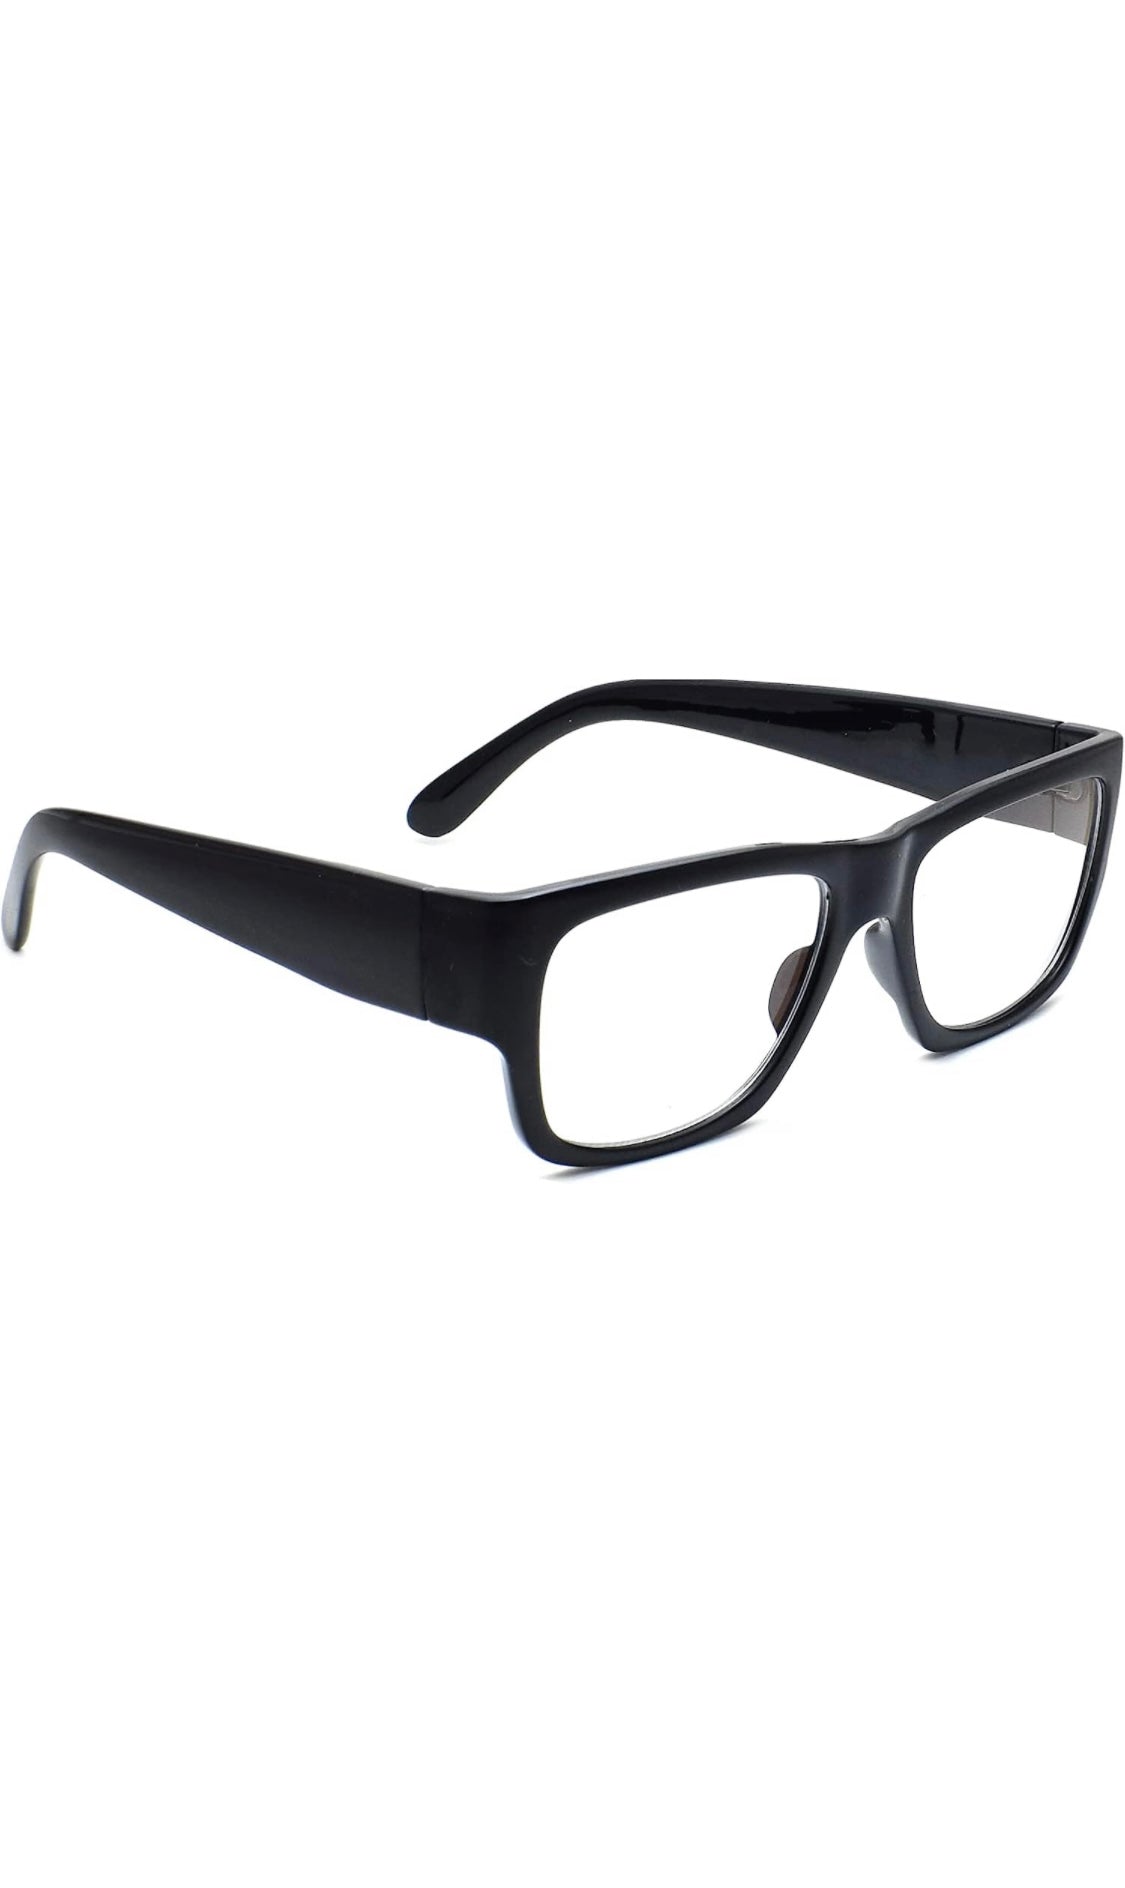 Jodykoes Thick Frame Unisex Anti Glare Eyeglasses Eyewear Spectacle (Black) - Jodykoes ®